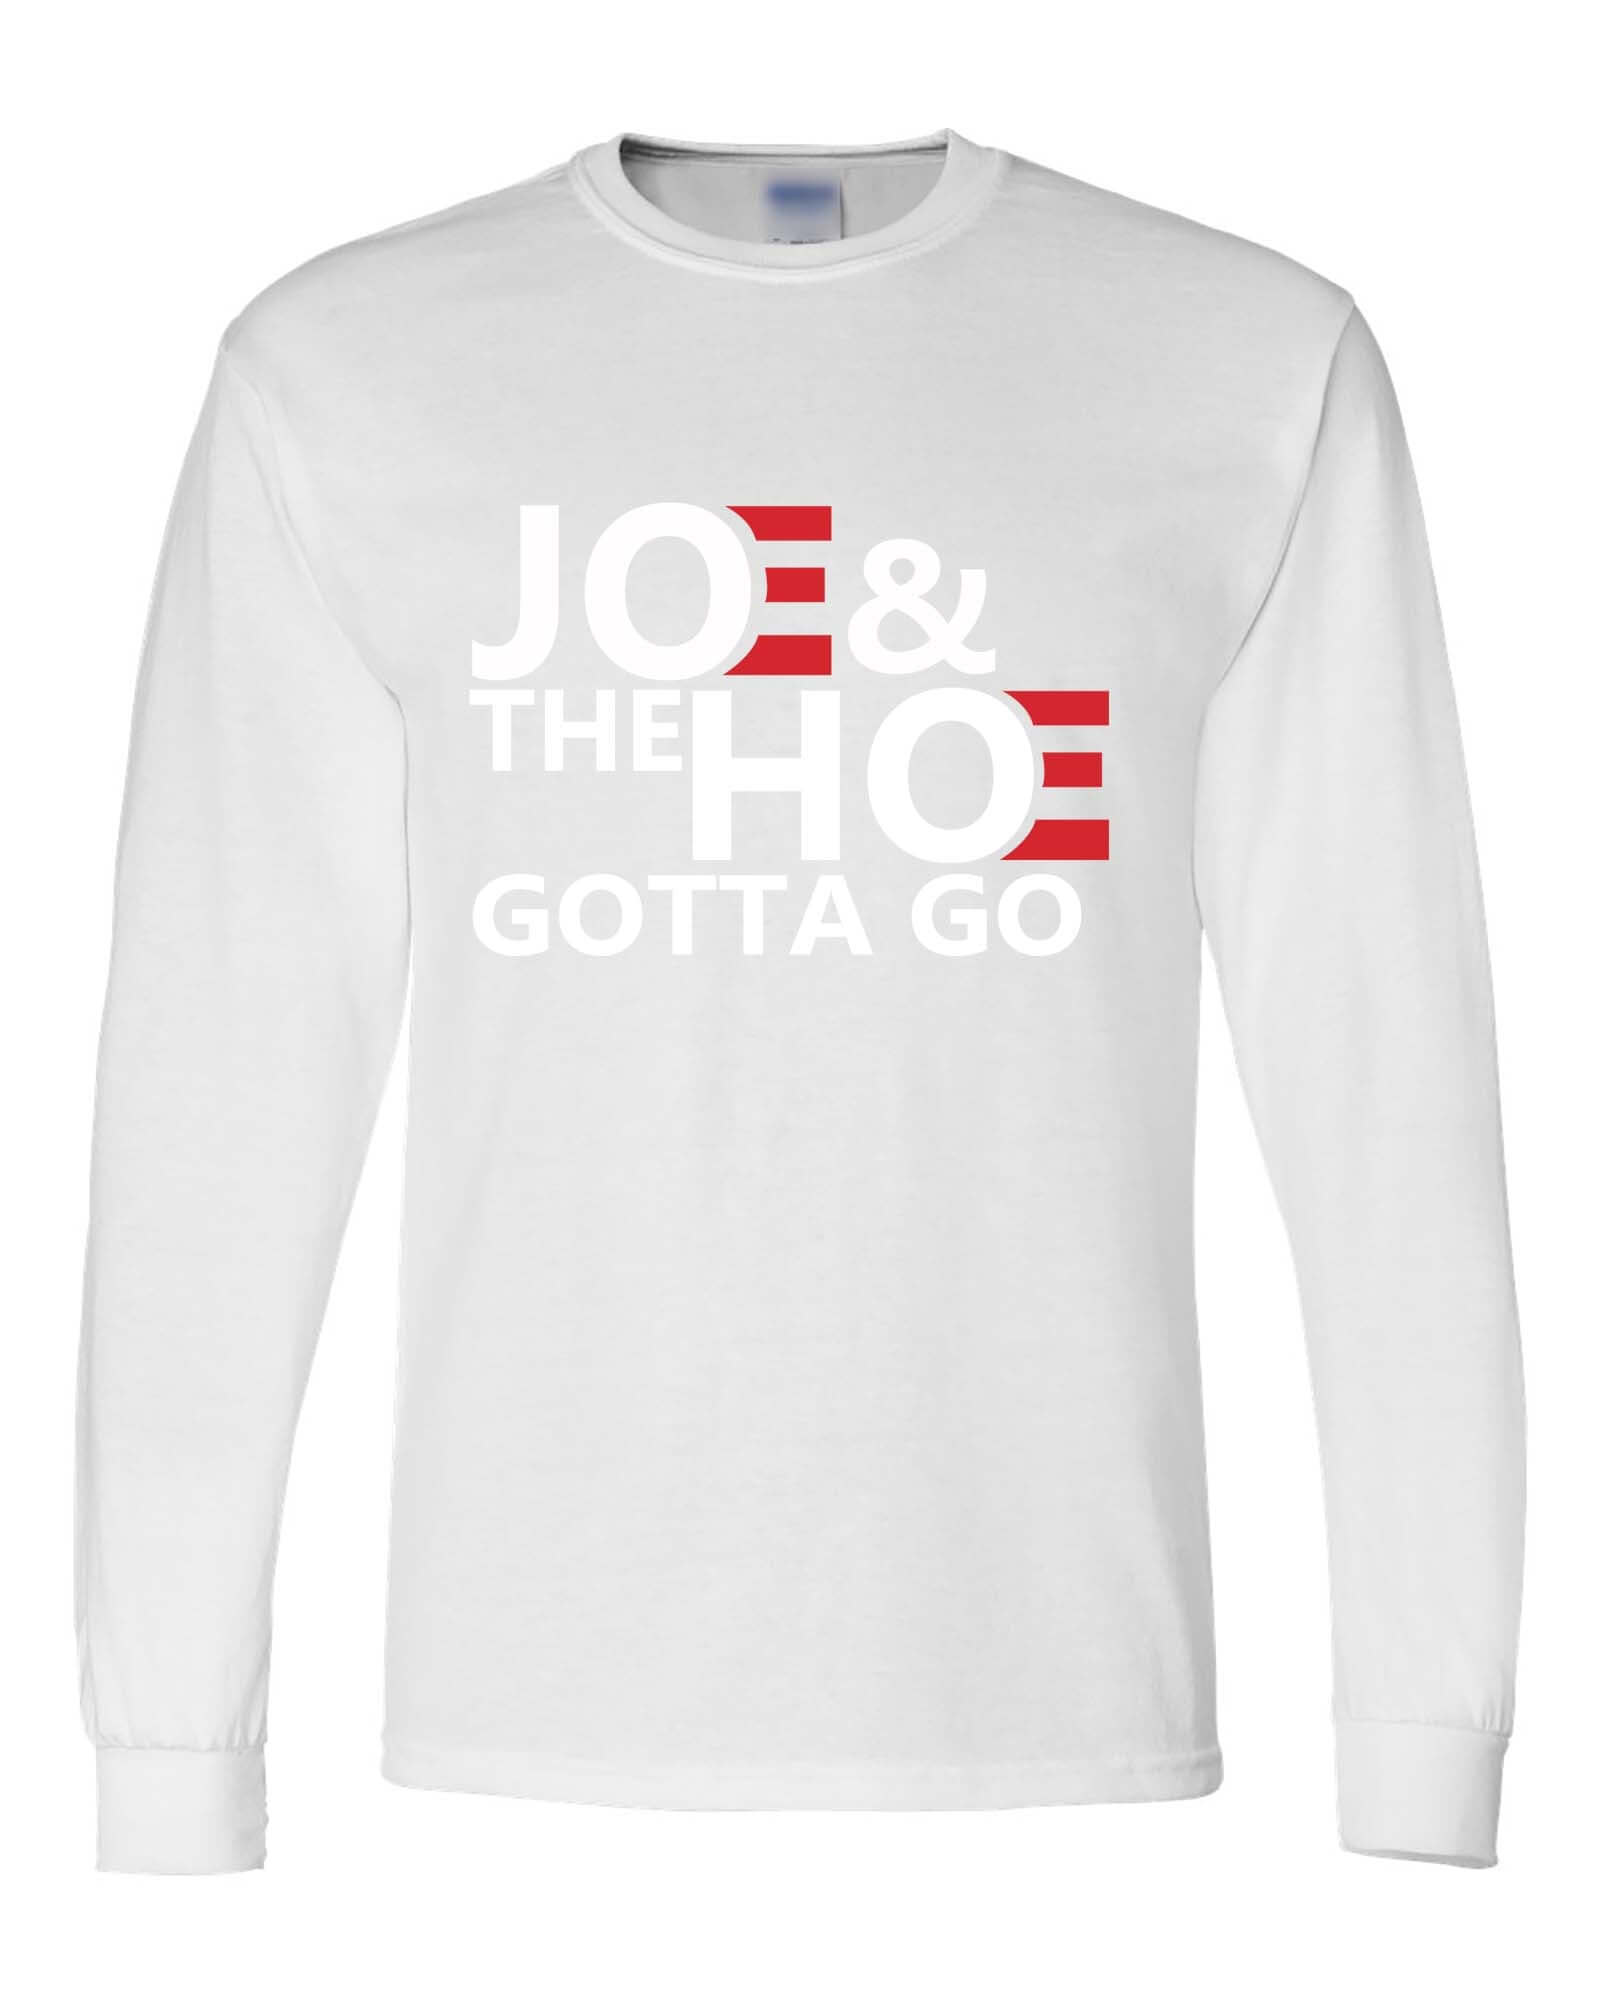 Joe's Gotta Go Funny Long Sleeve Shirt - ApparelinClick